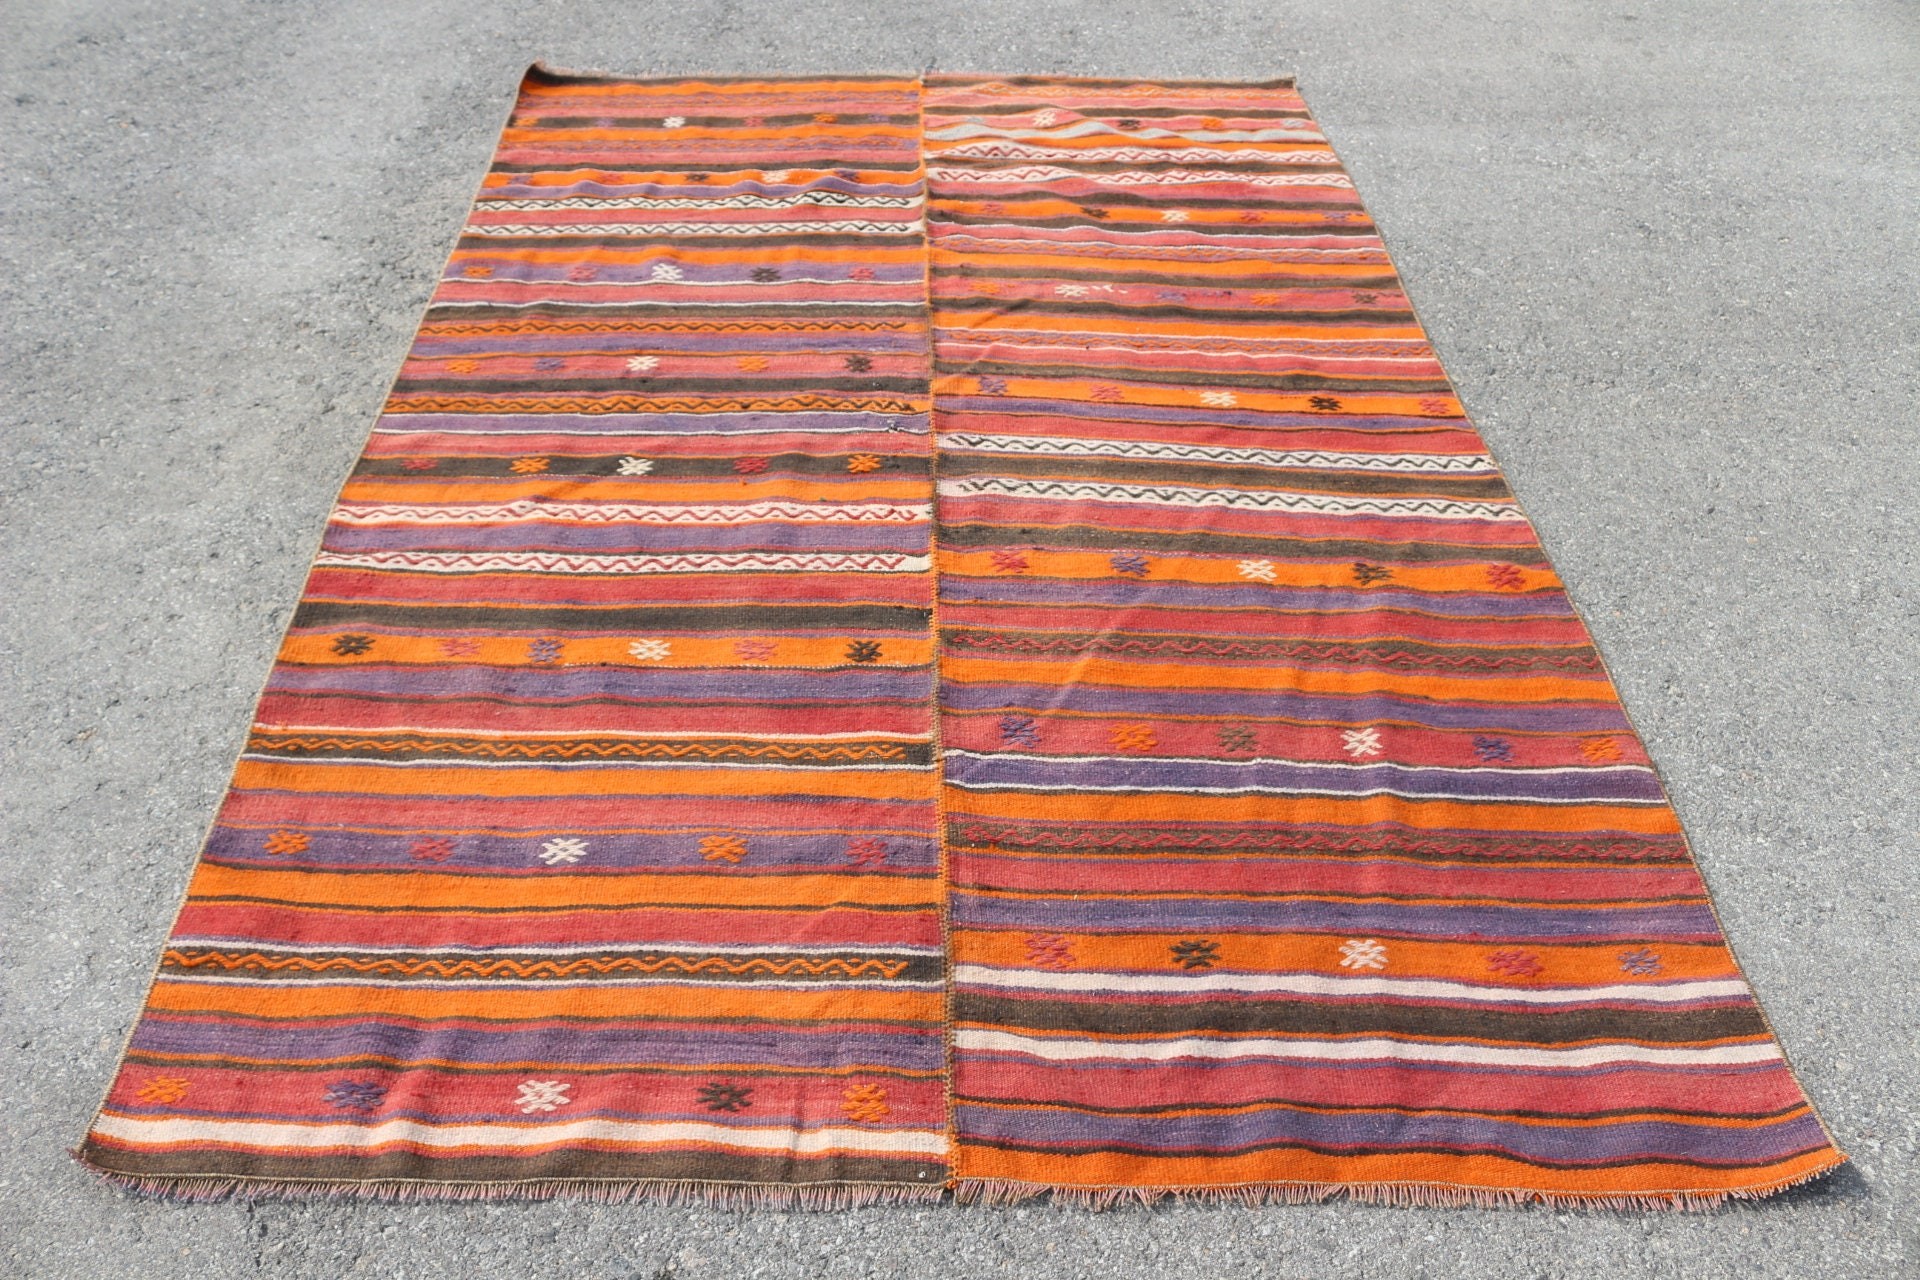 Kilim, Moroccan Rugs, Dining Room Rugs, Orange Floor Rug, Salon Rug, 5.3x8.3 ft Large Rug, Oriental Rug, Turkish Rug, Old Rug, Vintage Rugs